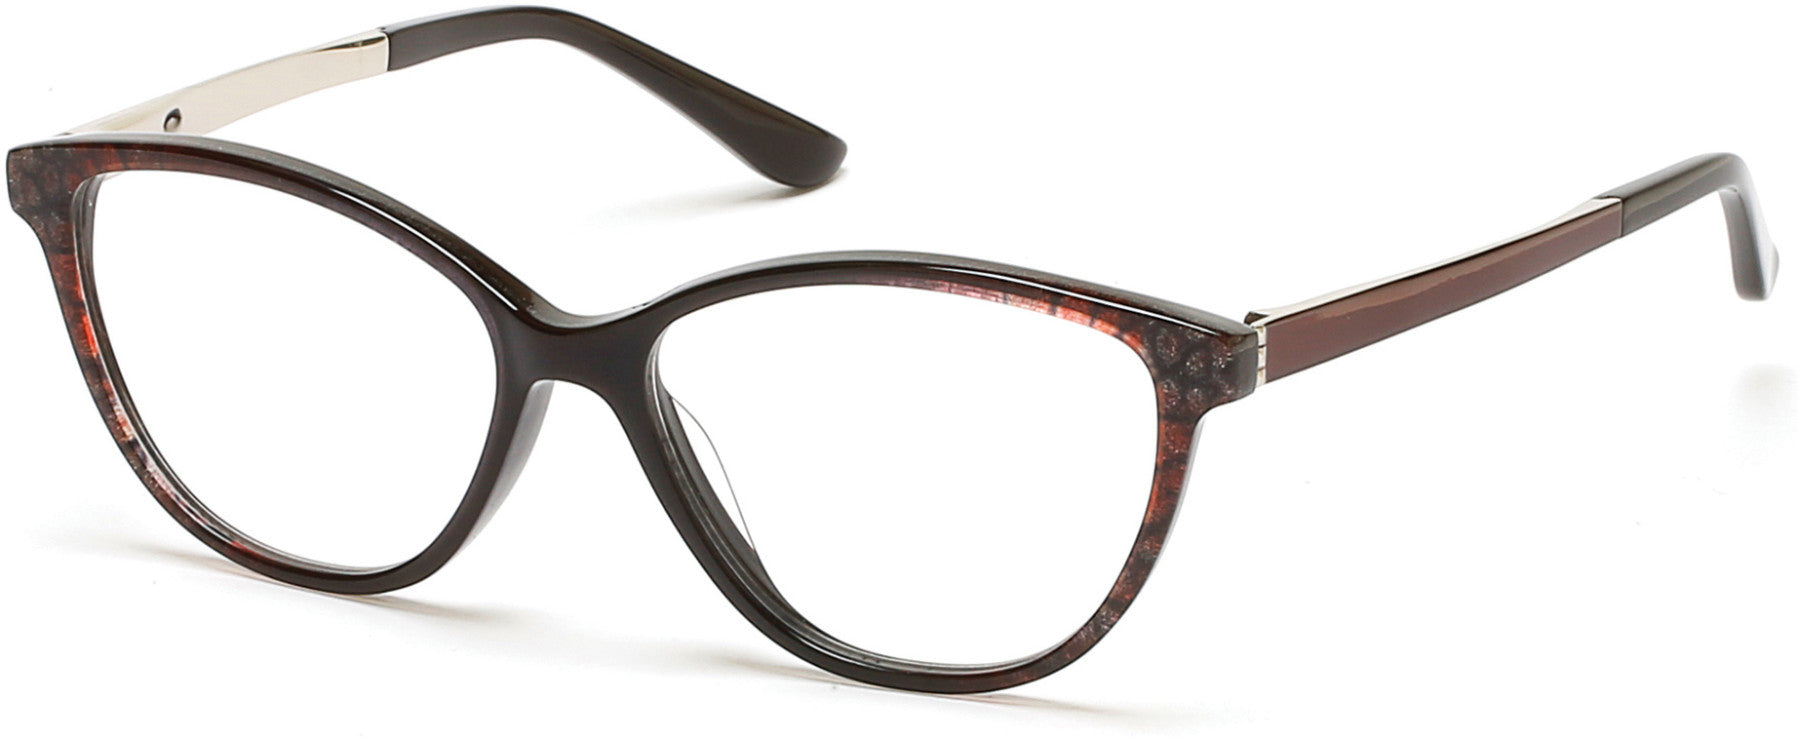 Marcolin MA5002 Eyeglasses 050-050 - Dark Brown/other